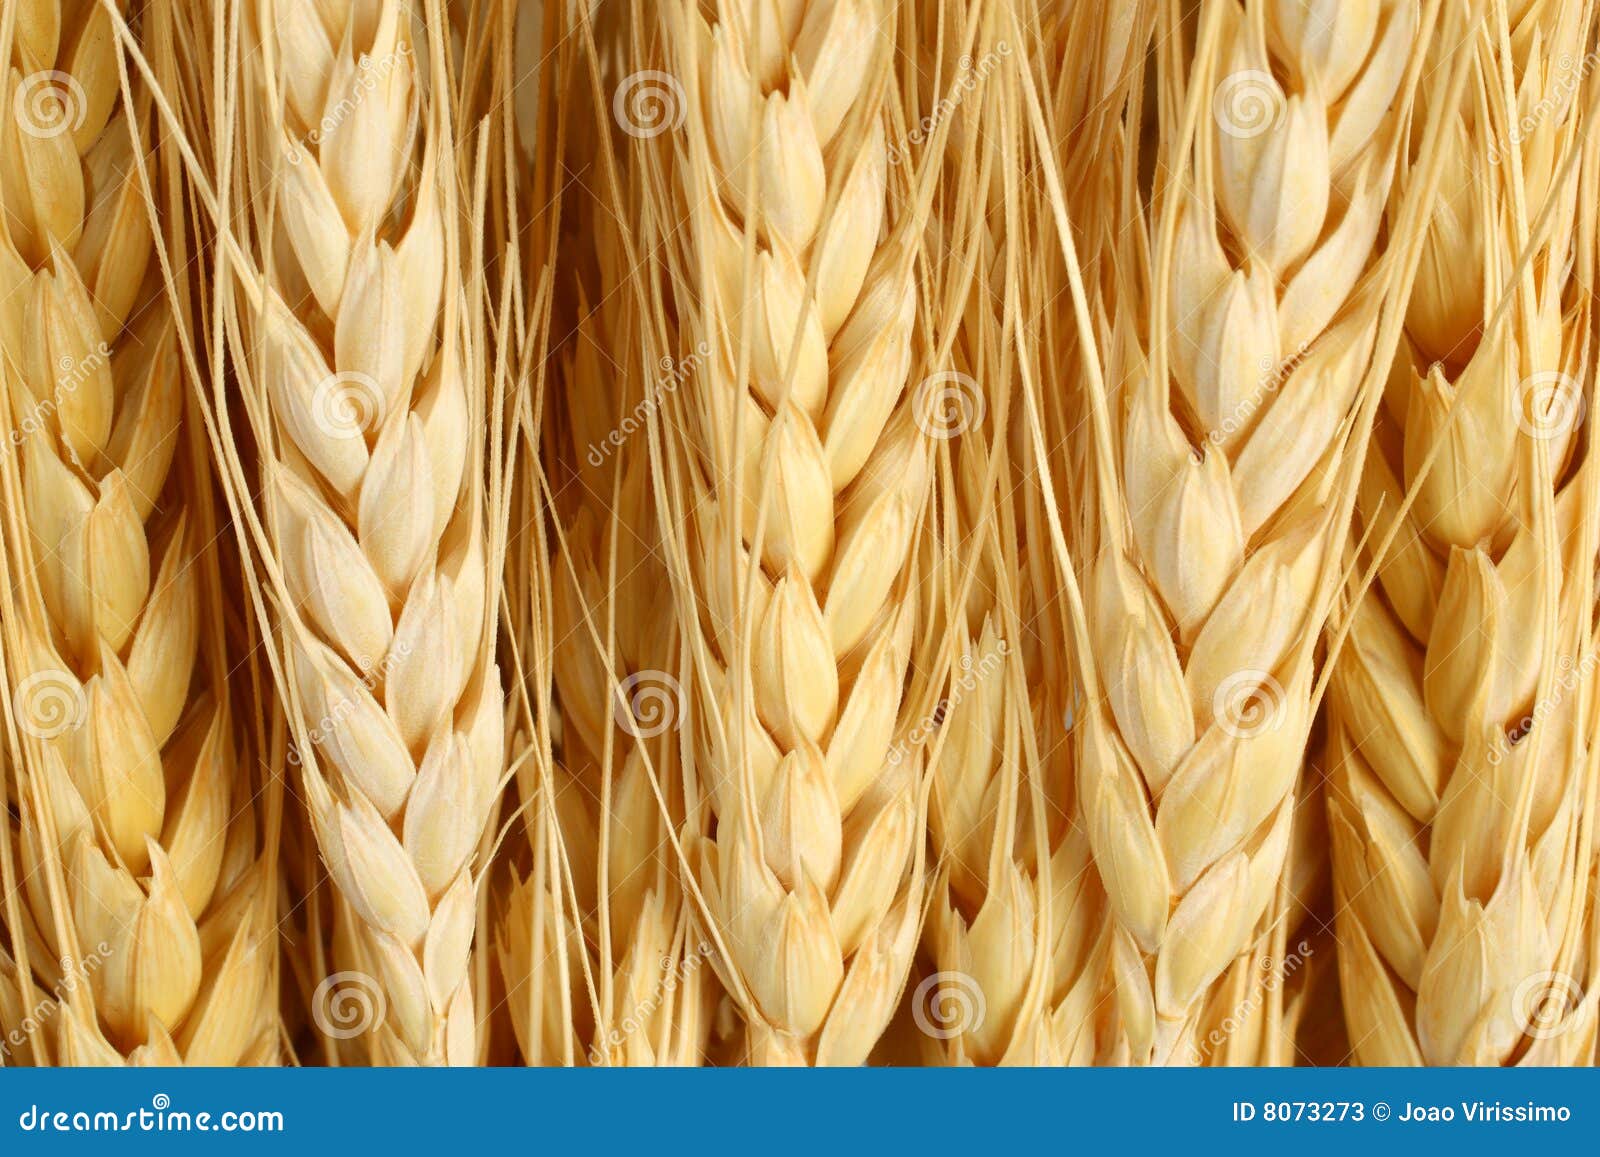 wheat macro agriculture & farming concept